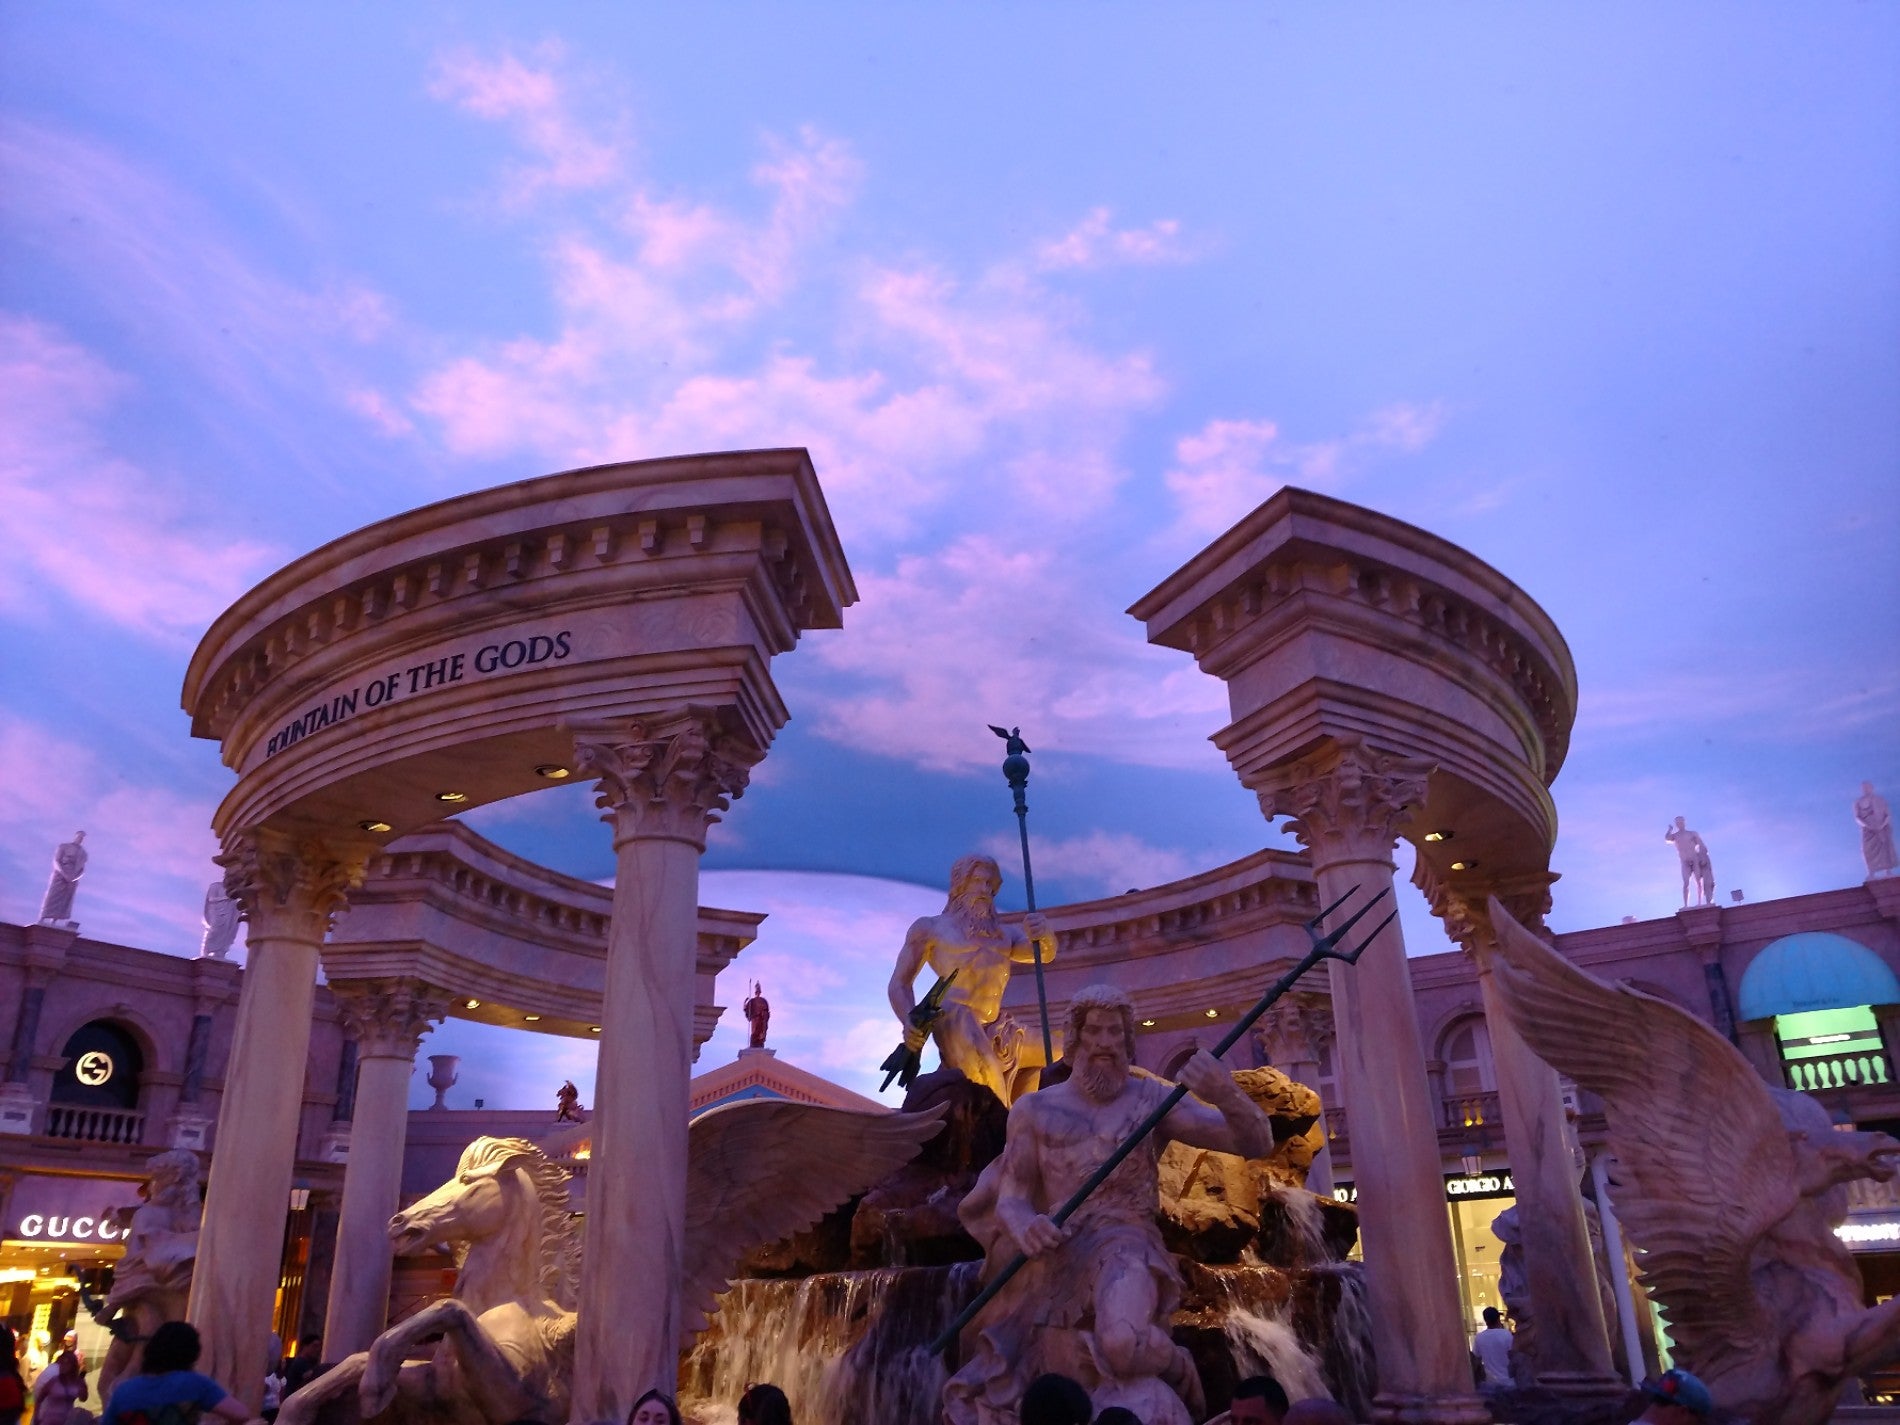 Las Vegas, Nevada, USA - Fountain of the Gods installation inside